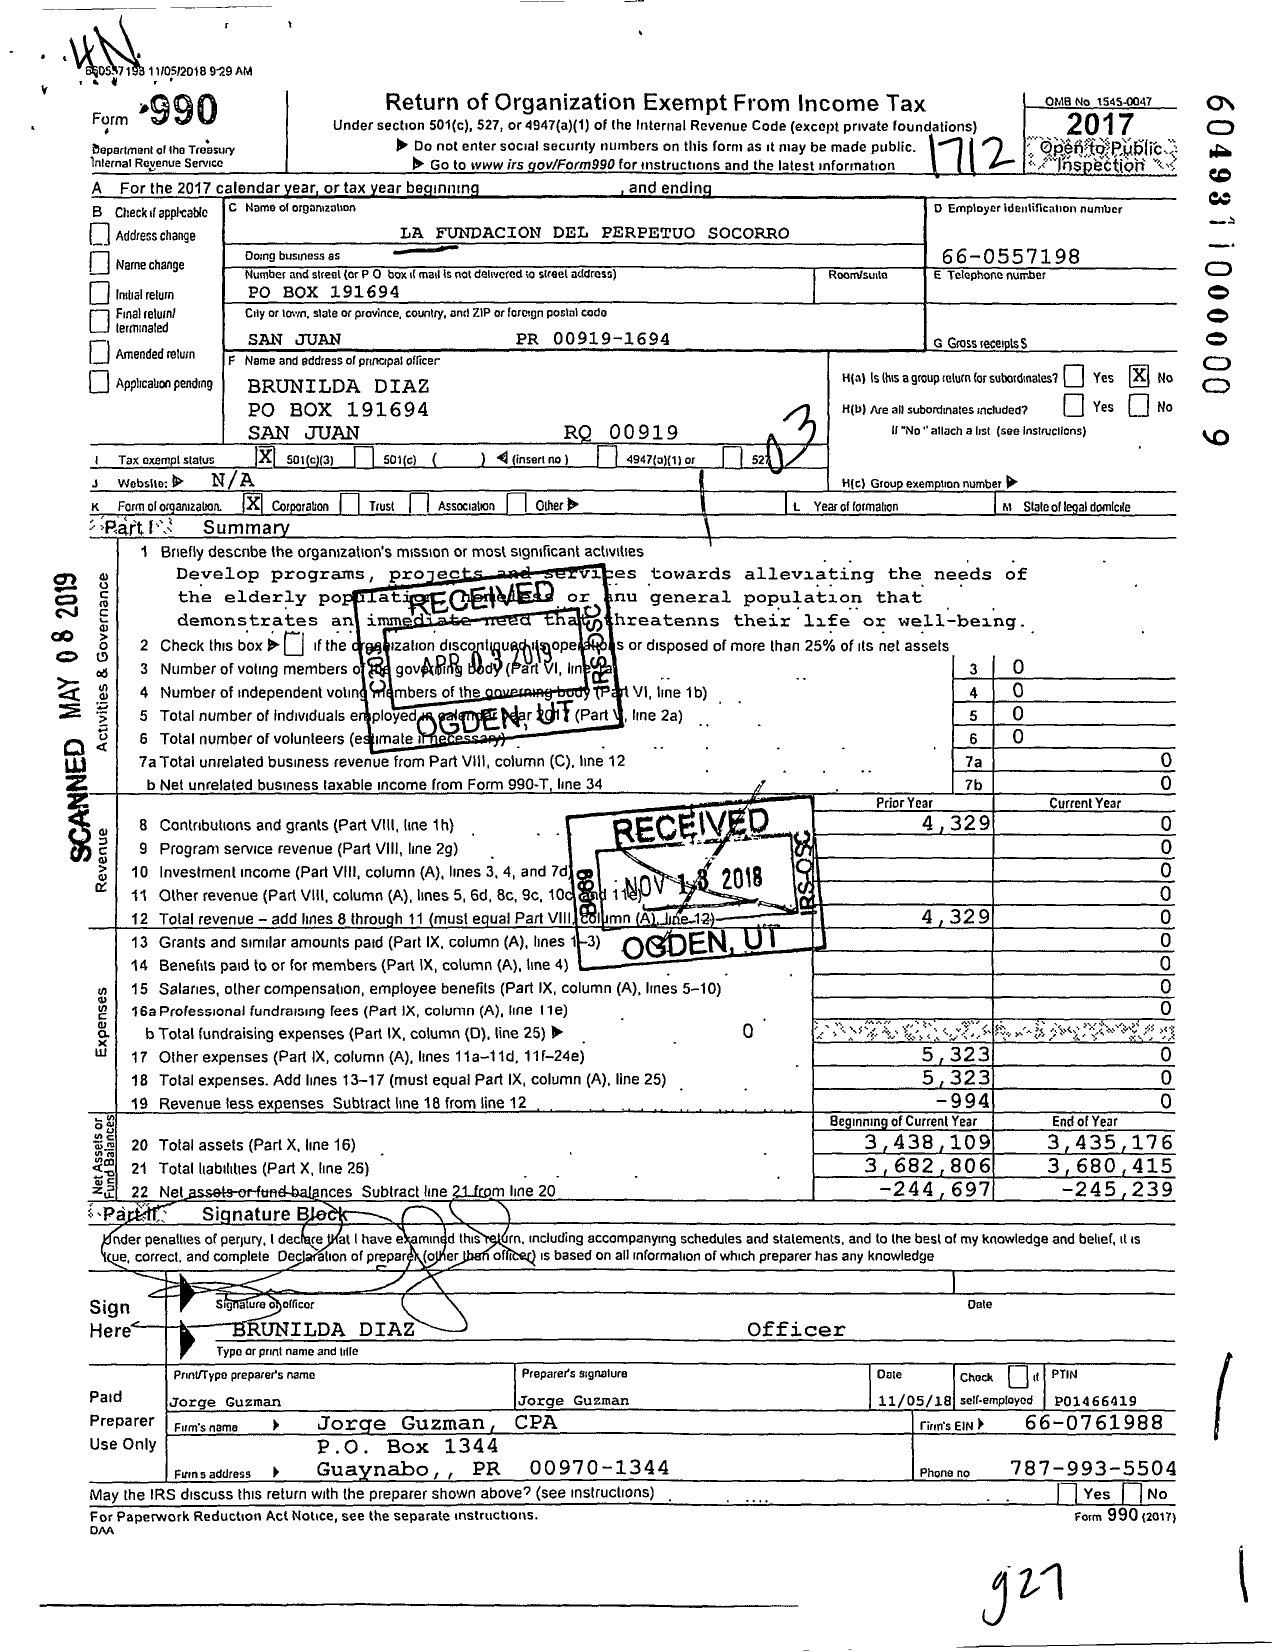 Image of first page of 2017 Form 990 for La Fundacion Del Perpetuo Socorro